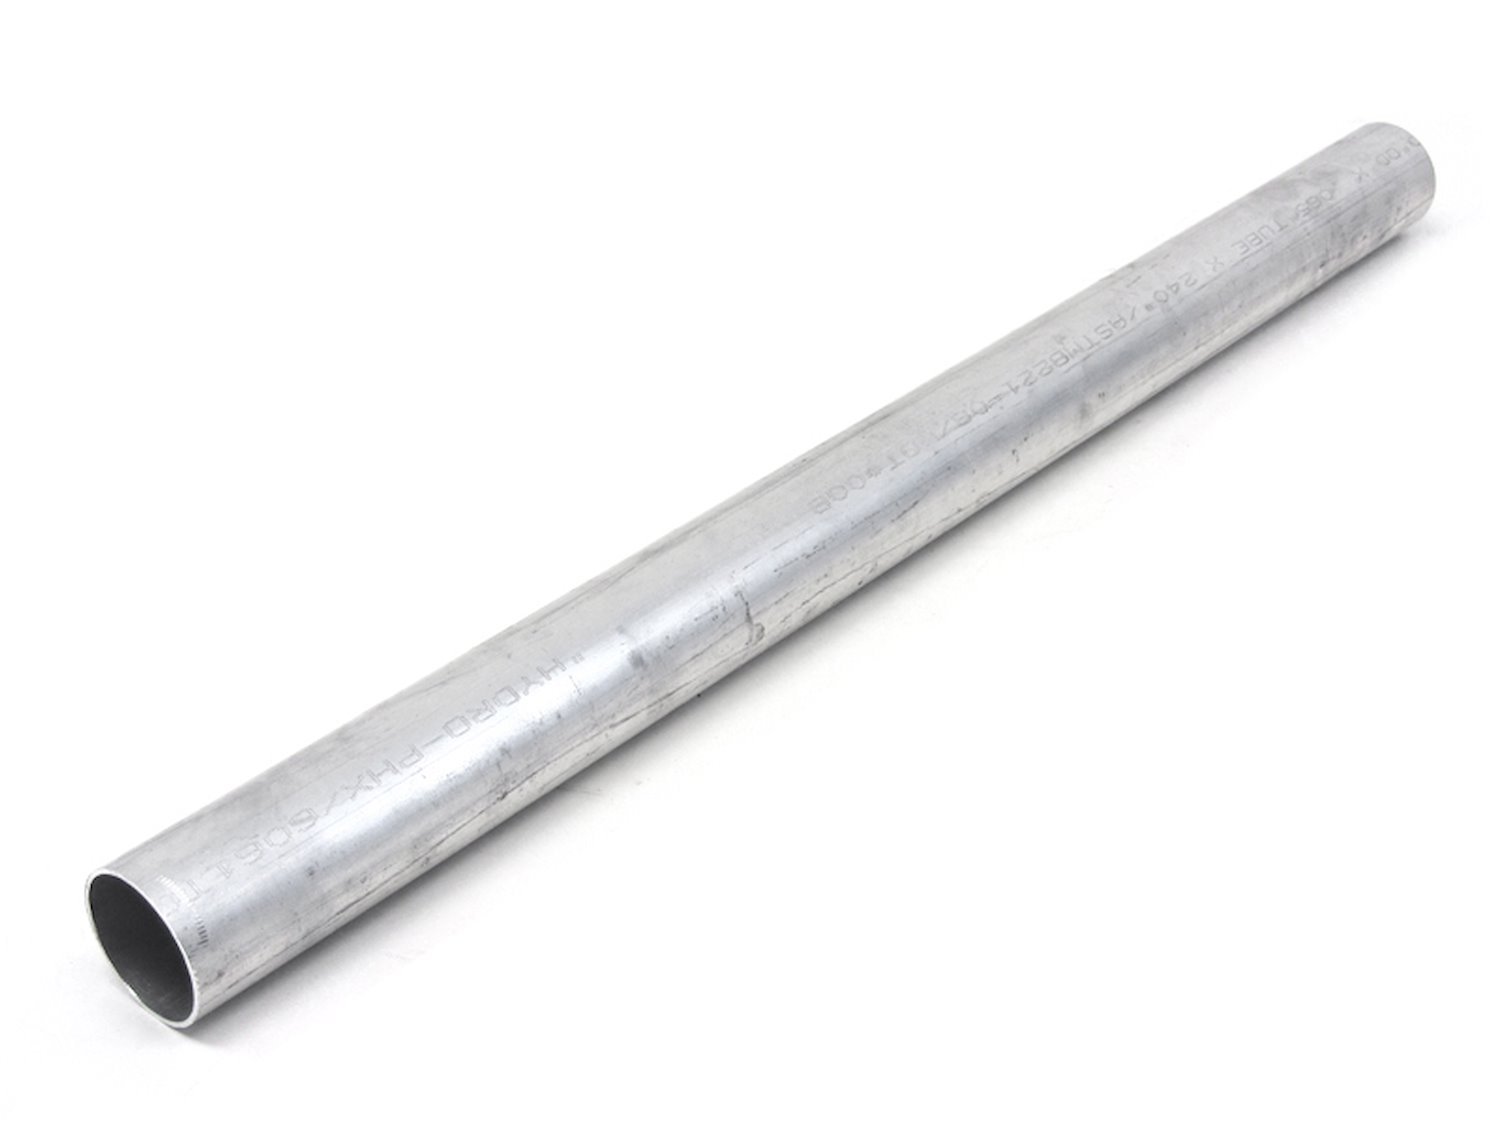 AST-062 Aluminum Tubing, 6061 Aluminum, Straight Tubing, 5/8 in. OD, Seamless, Raw Finish, 1 ft. Long